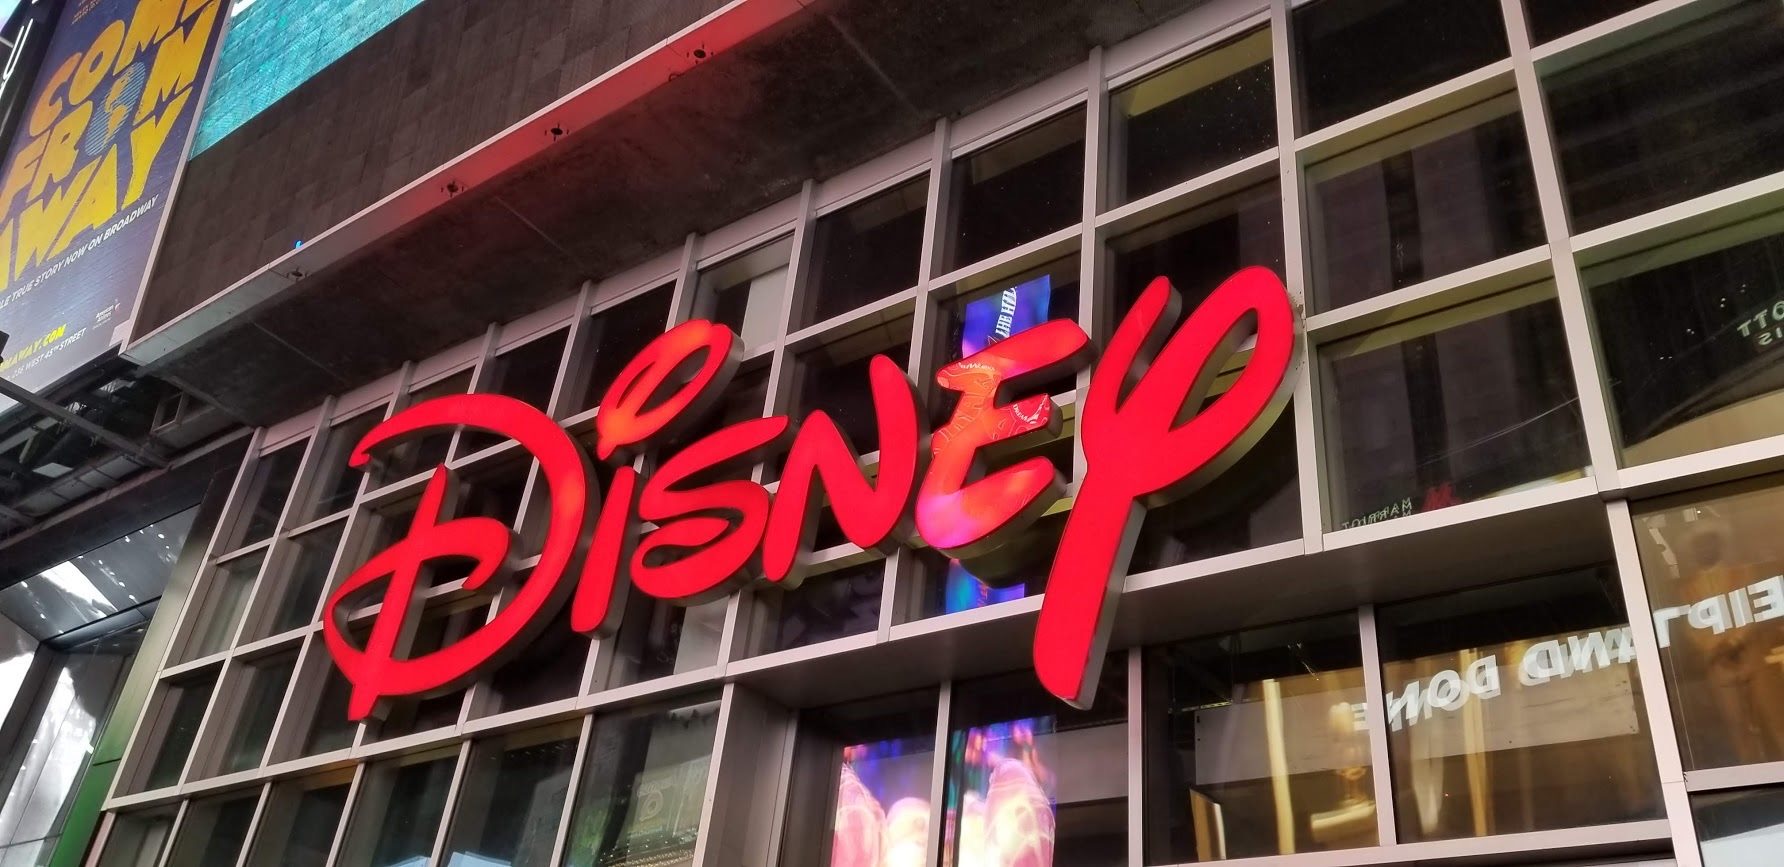 Saudi Arabia Investment Fund Buys 5 Million Shares in Disney Stocks